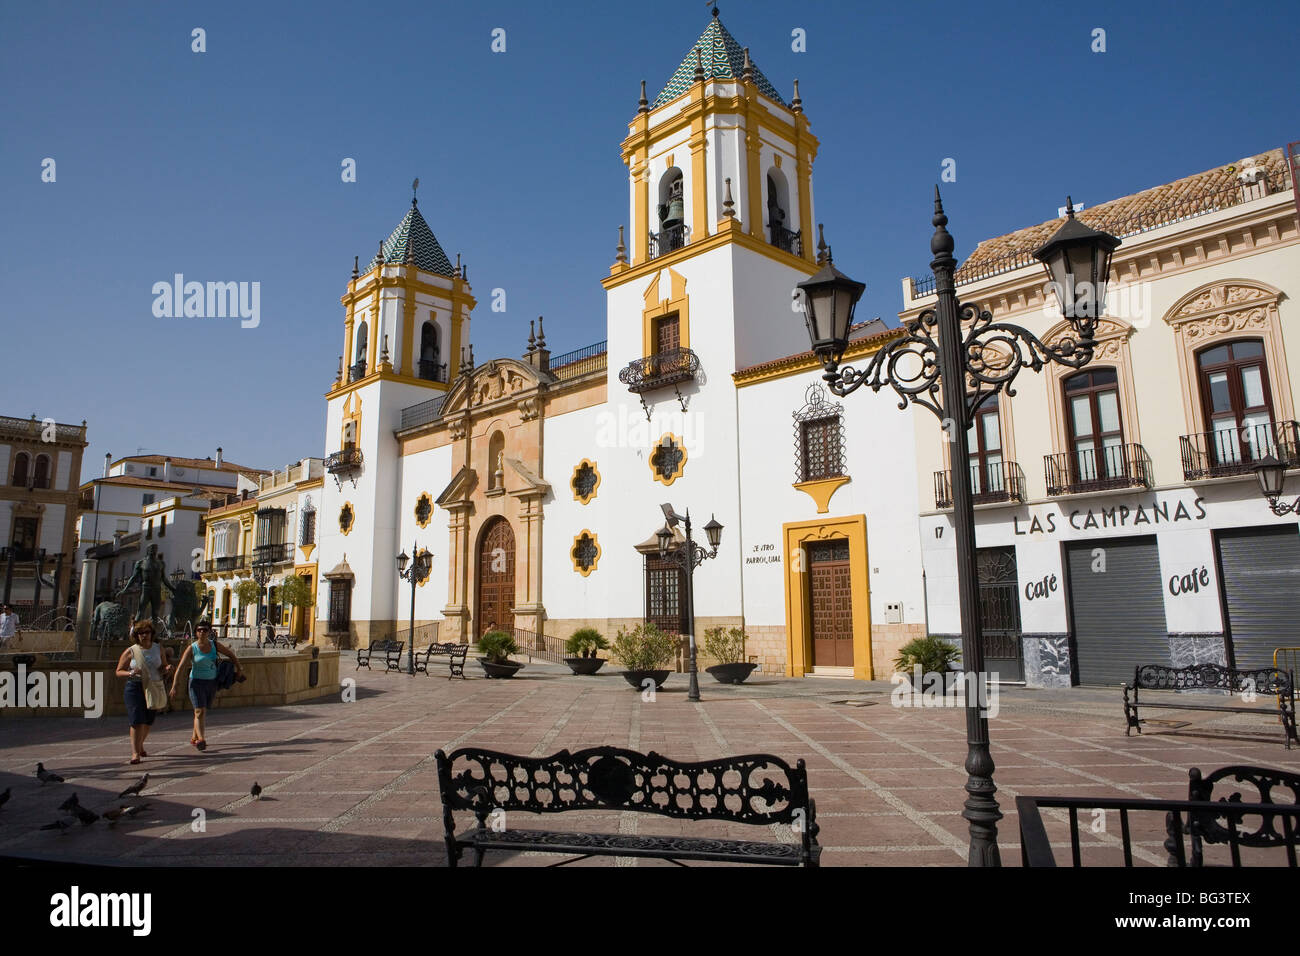 Plaza del Socorro, Ronda, un des villages blancs, la province de Malaga, Andalousie, Espagne, Europe Banque D'Images